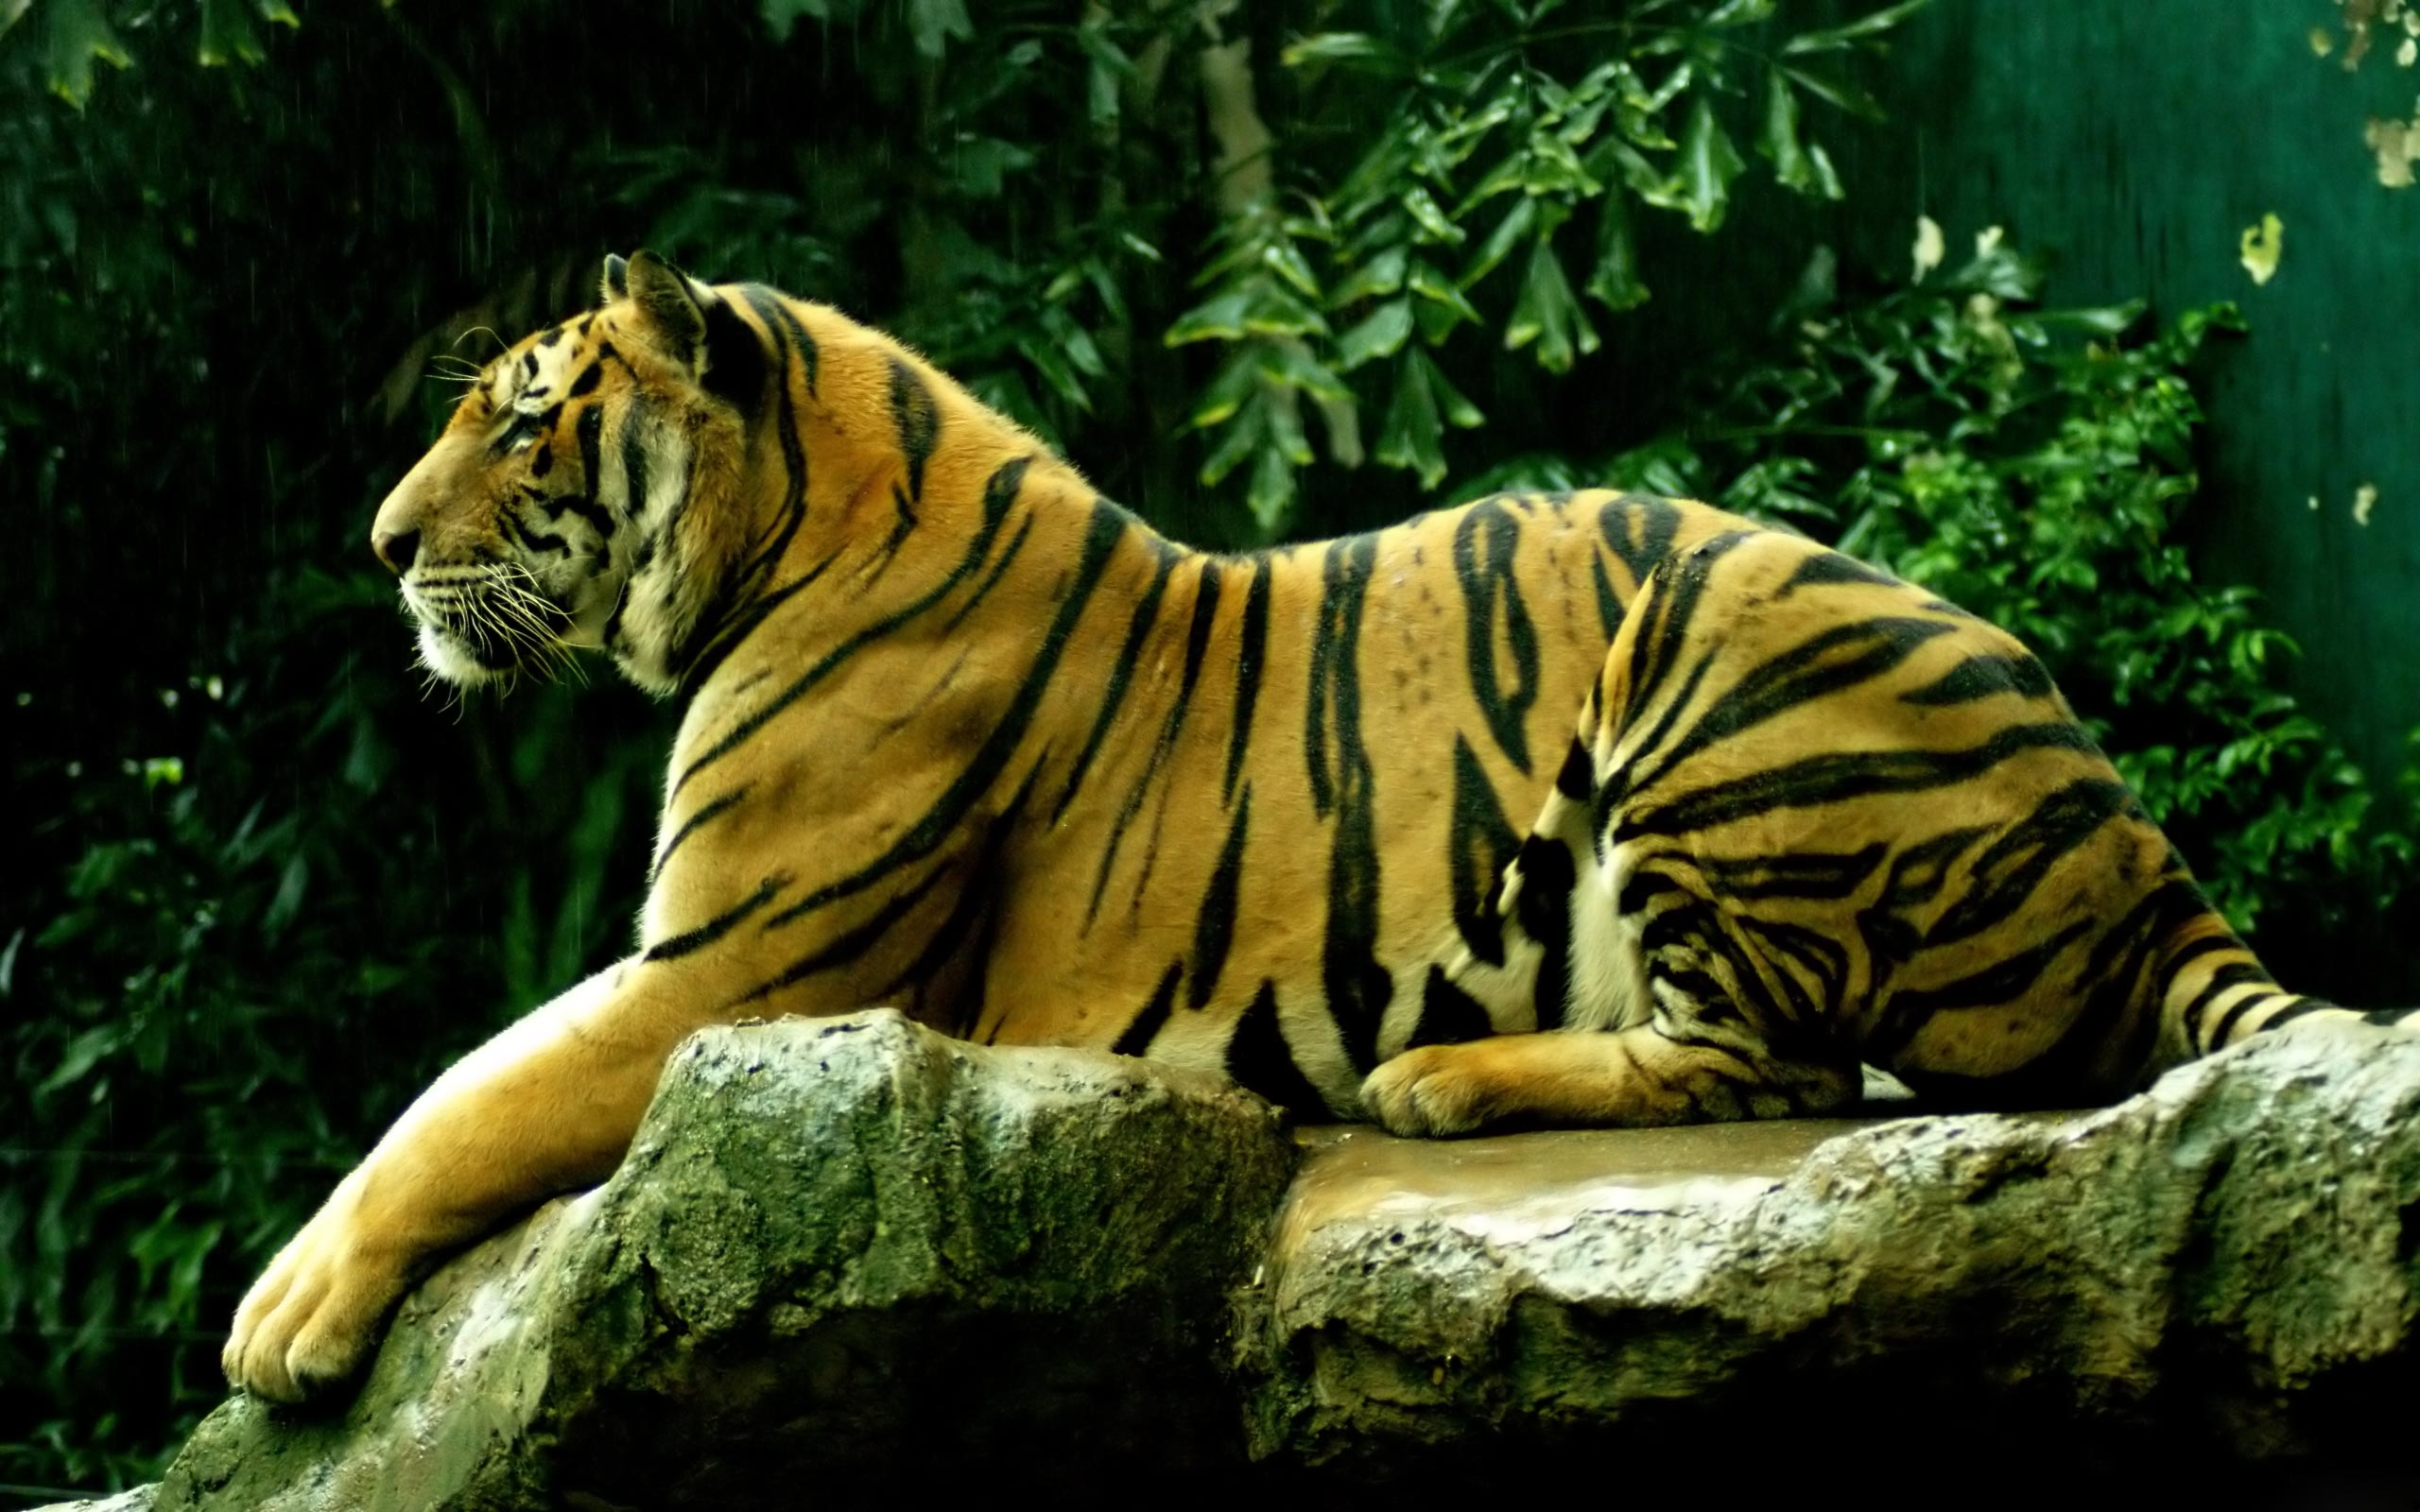 Tiger Relax HD Image wallpaper